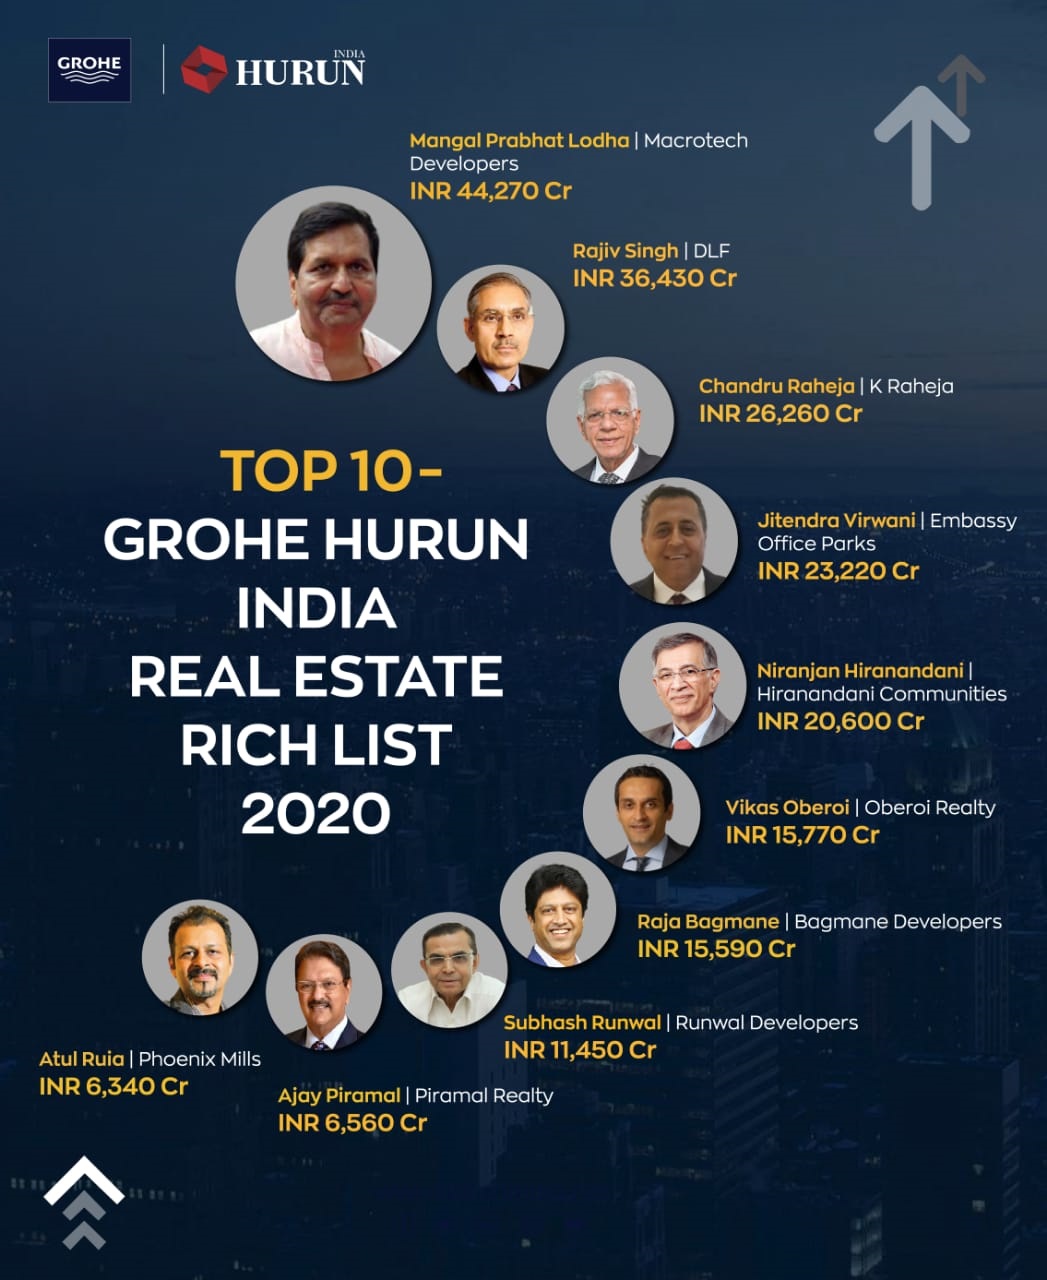 Hurun India unveils GROHE Hurun India Real estate Richlist 2020